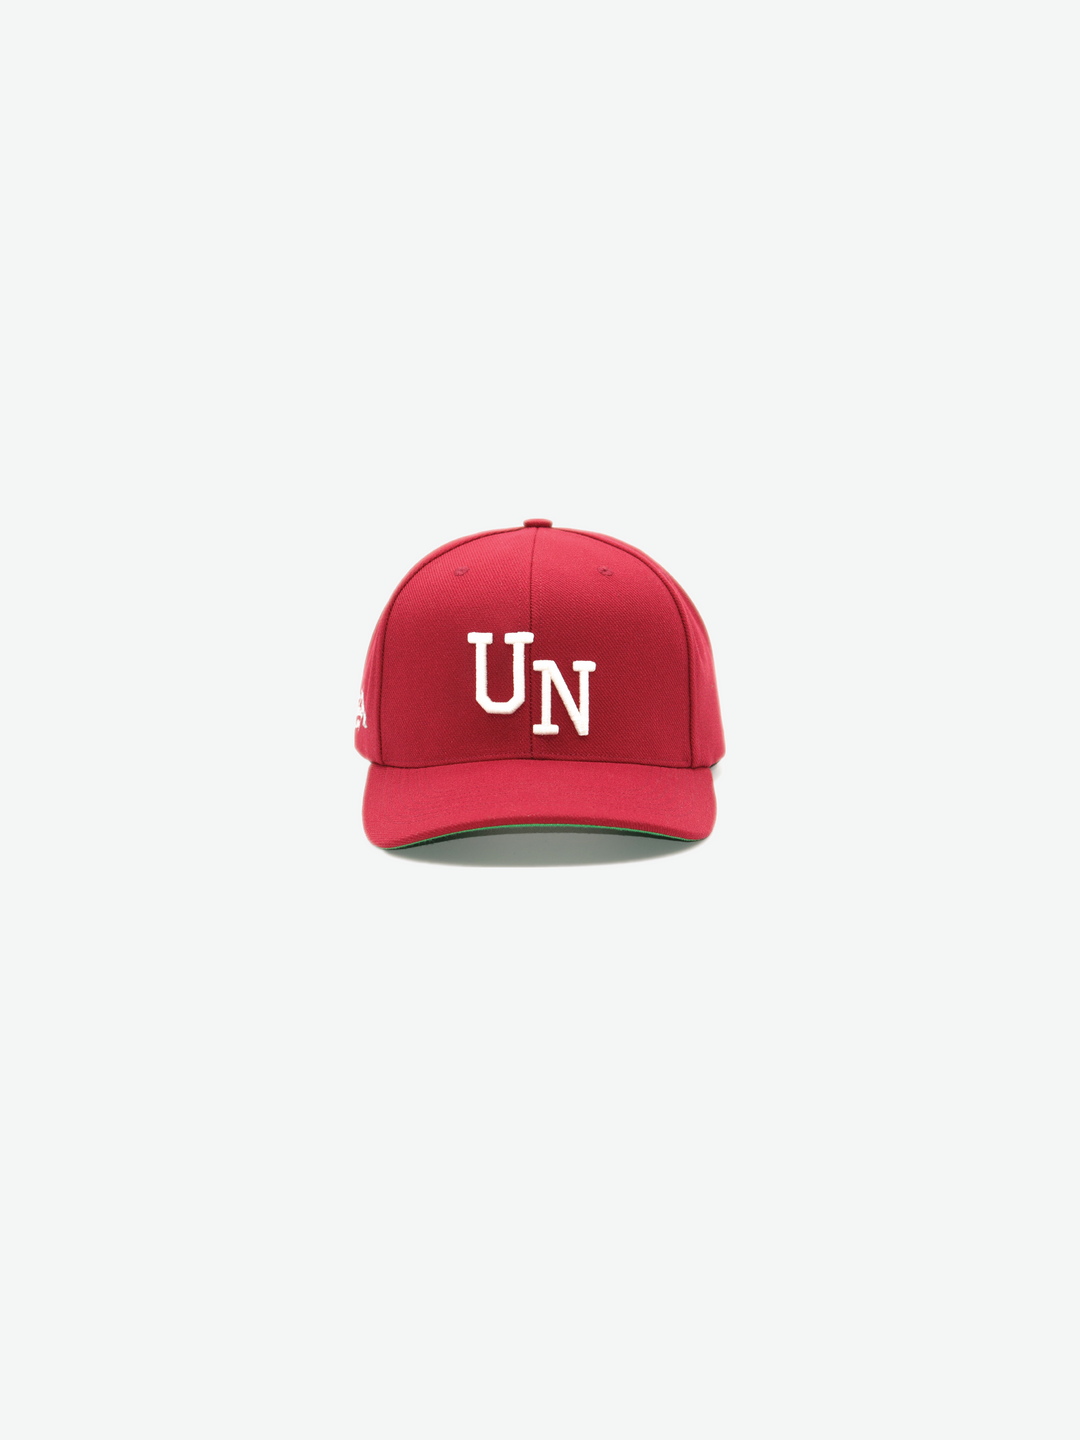 CHOSEN UN SNAPBACKS – Uninterrupted Store